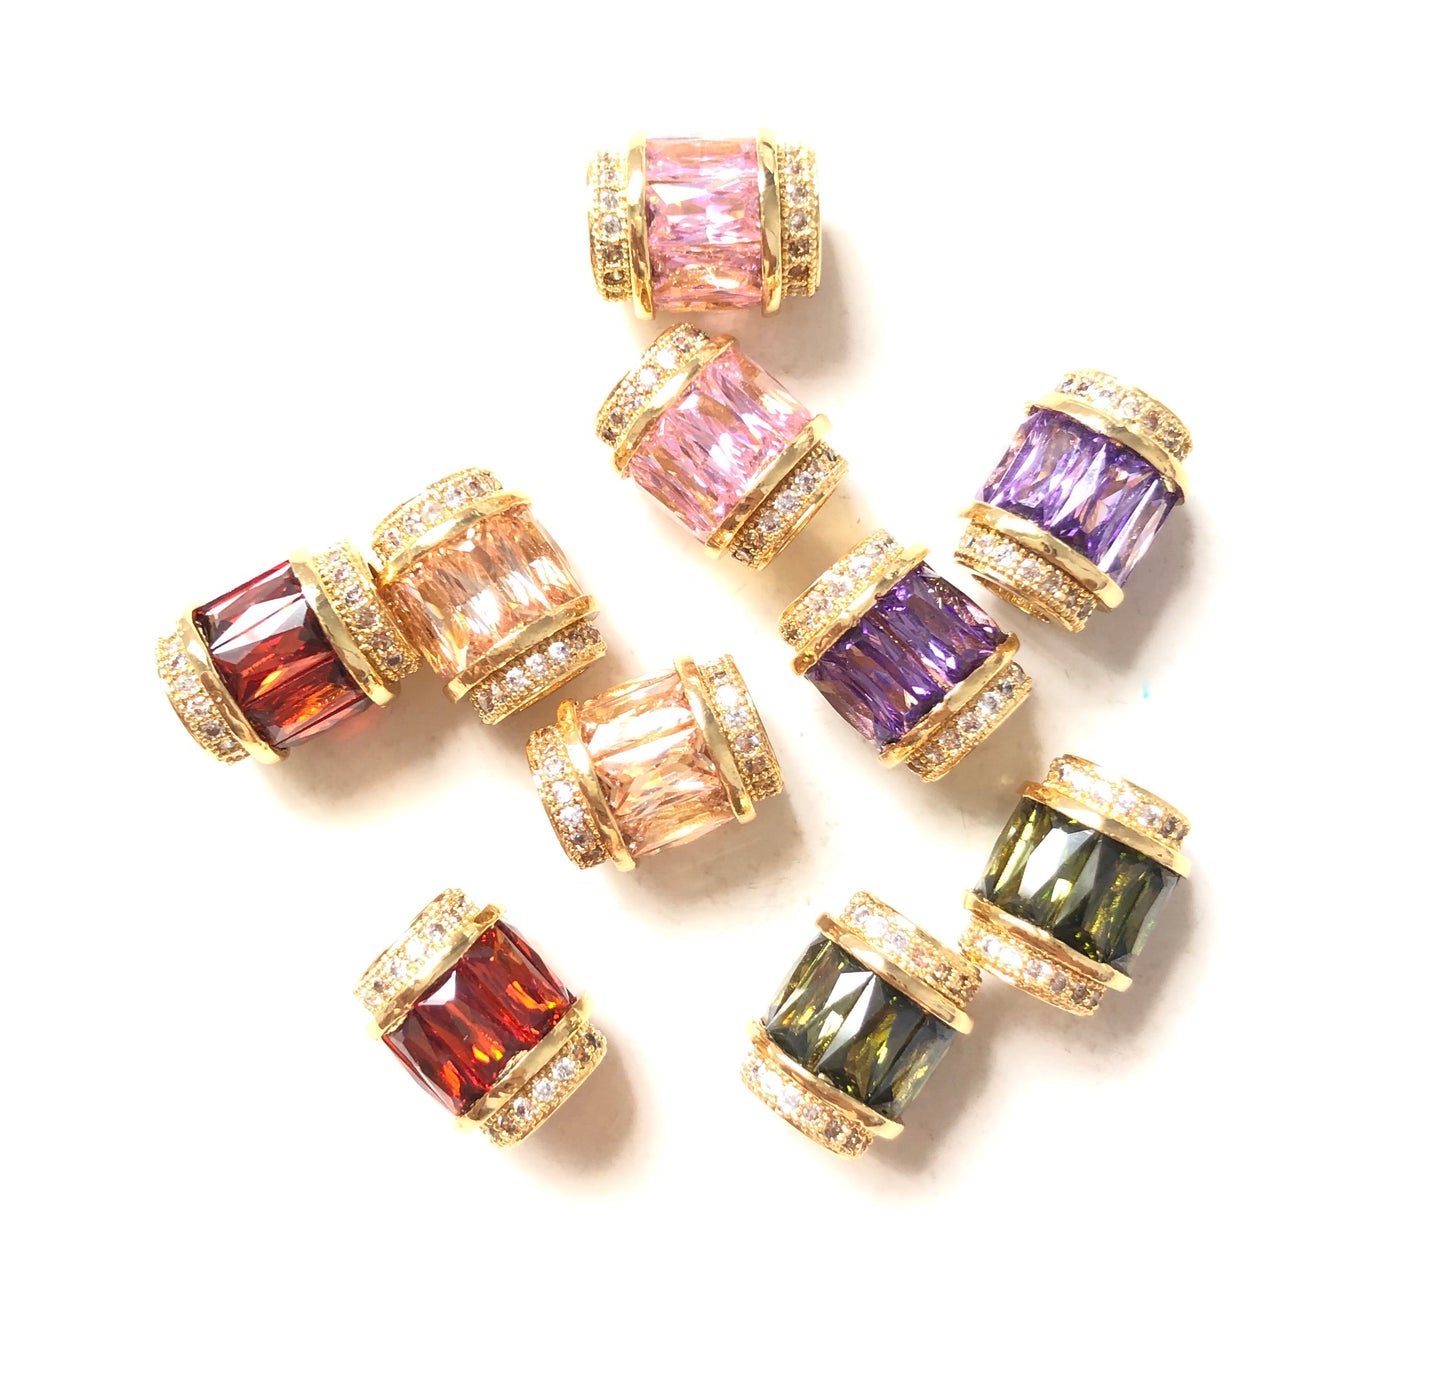 10pcs/lot 12*10mm Mix Color CZ Paved Big Hole Spacers Gold CZ Paved Spacers Big Hole Beads New Spacers Arrivals Charms Beads Beyond